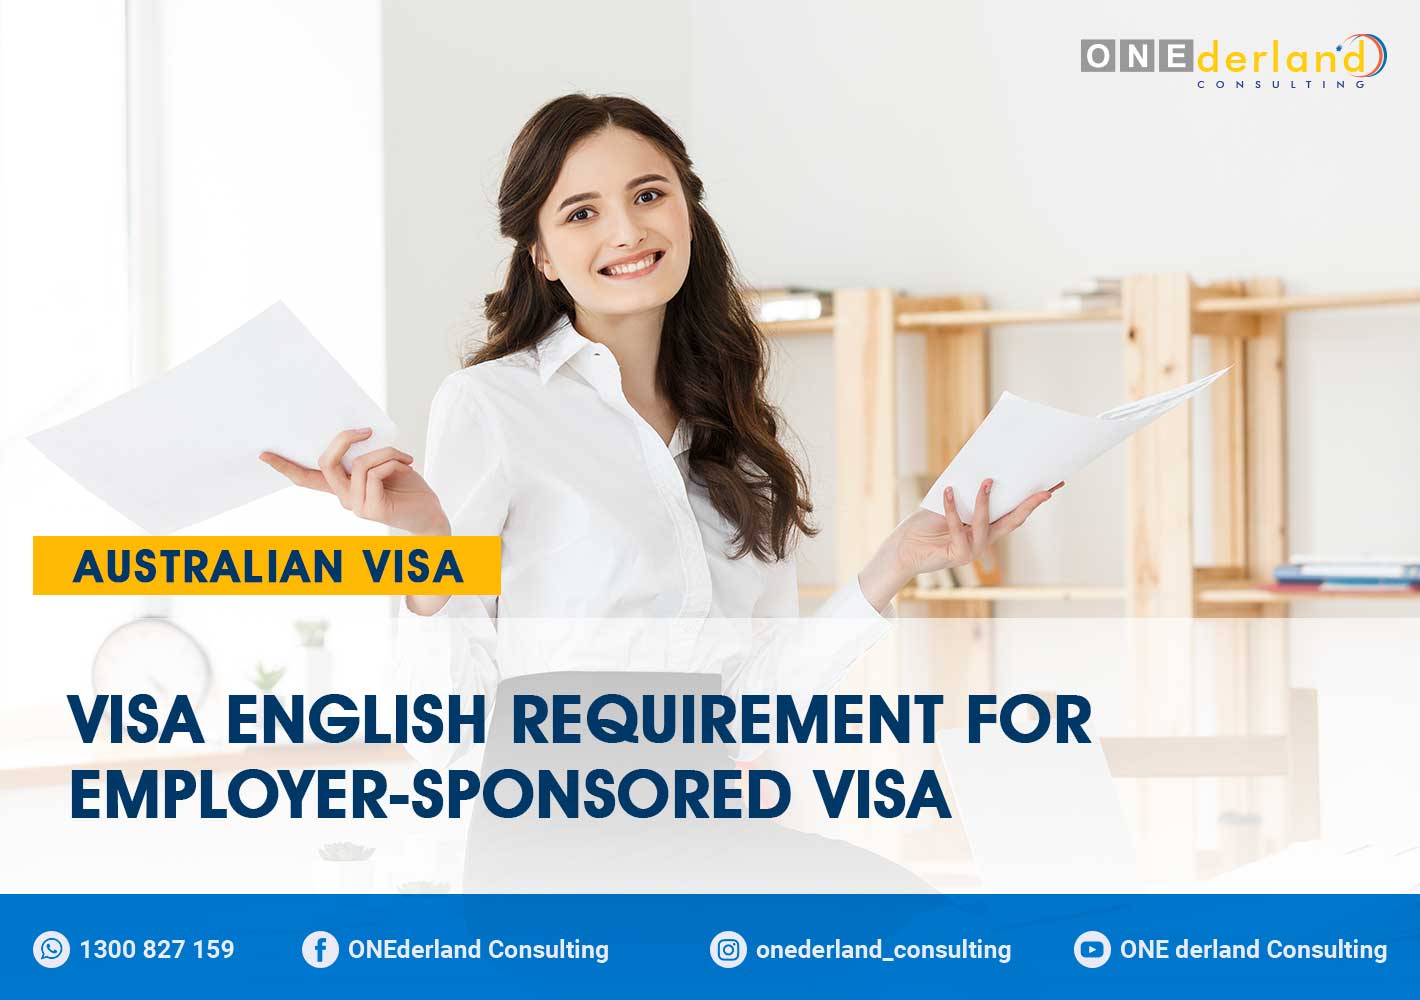 Visa English Requirement for Employer-Sponsored Visa